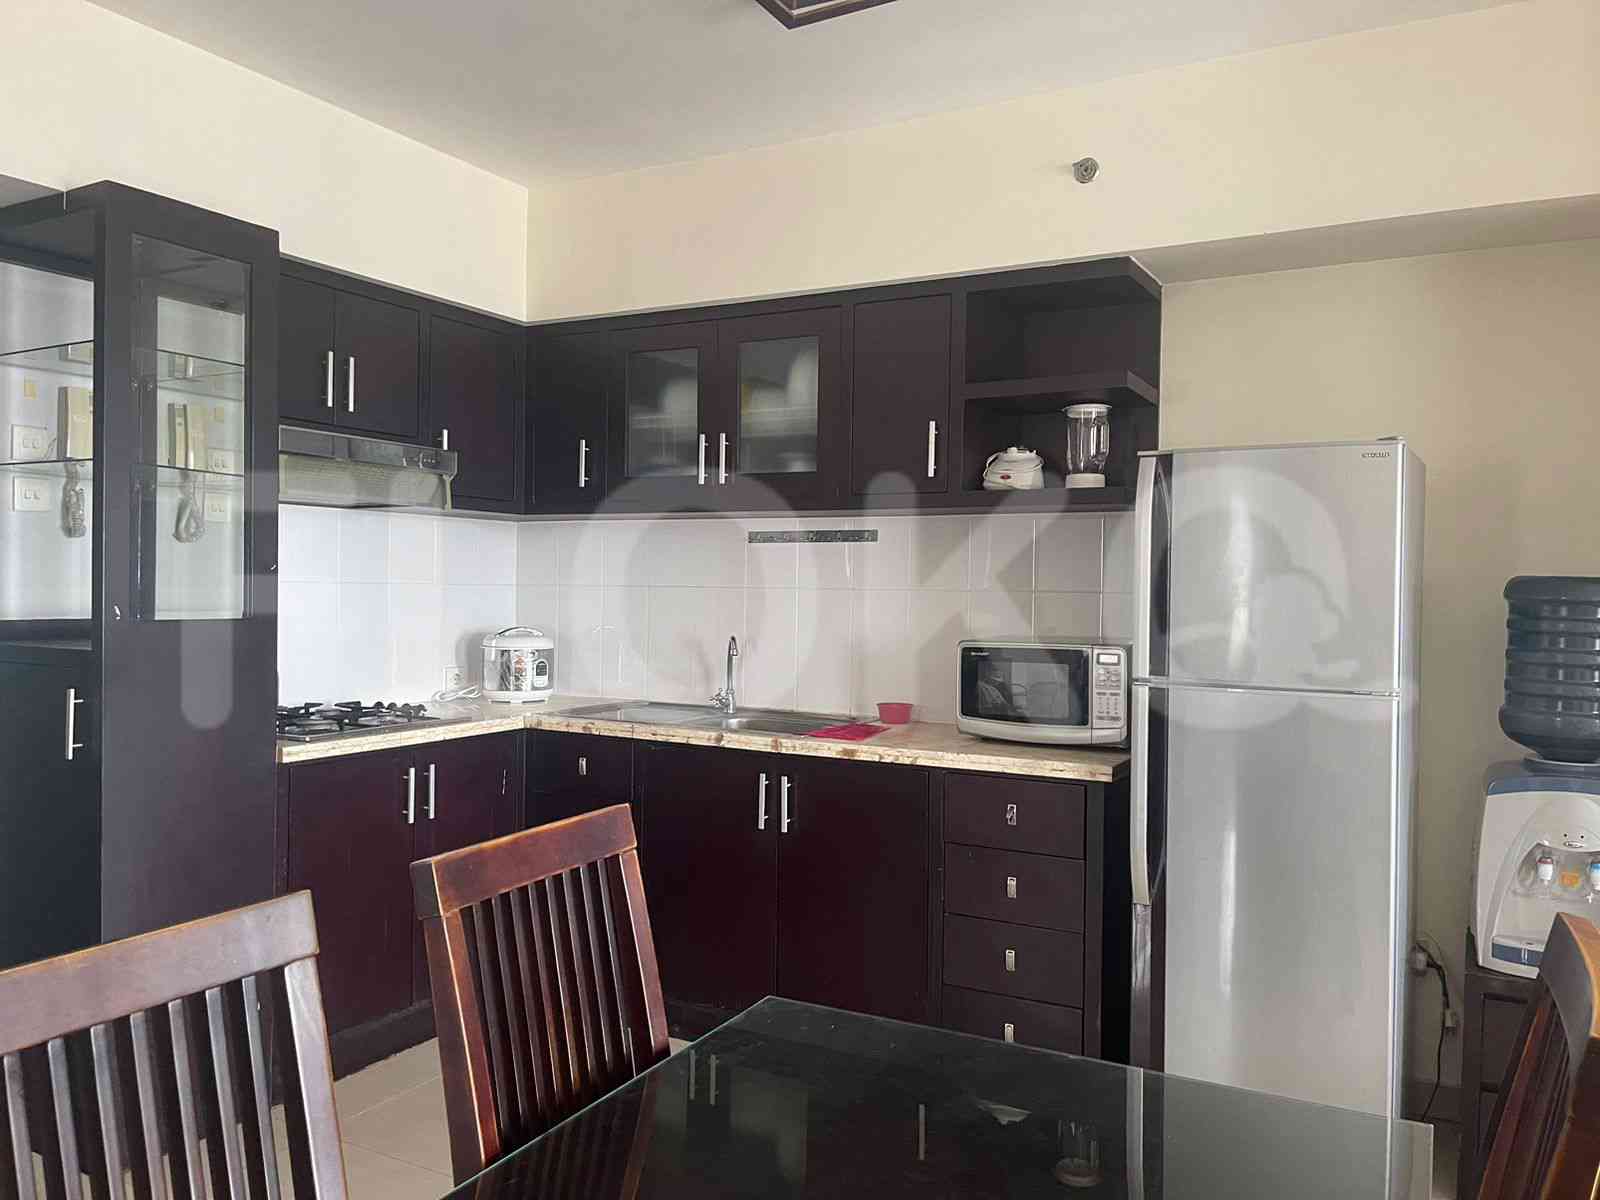 64 sqm, 21st floor, 2 BR apartment for sale in Kuningan 5